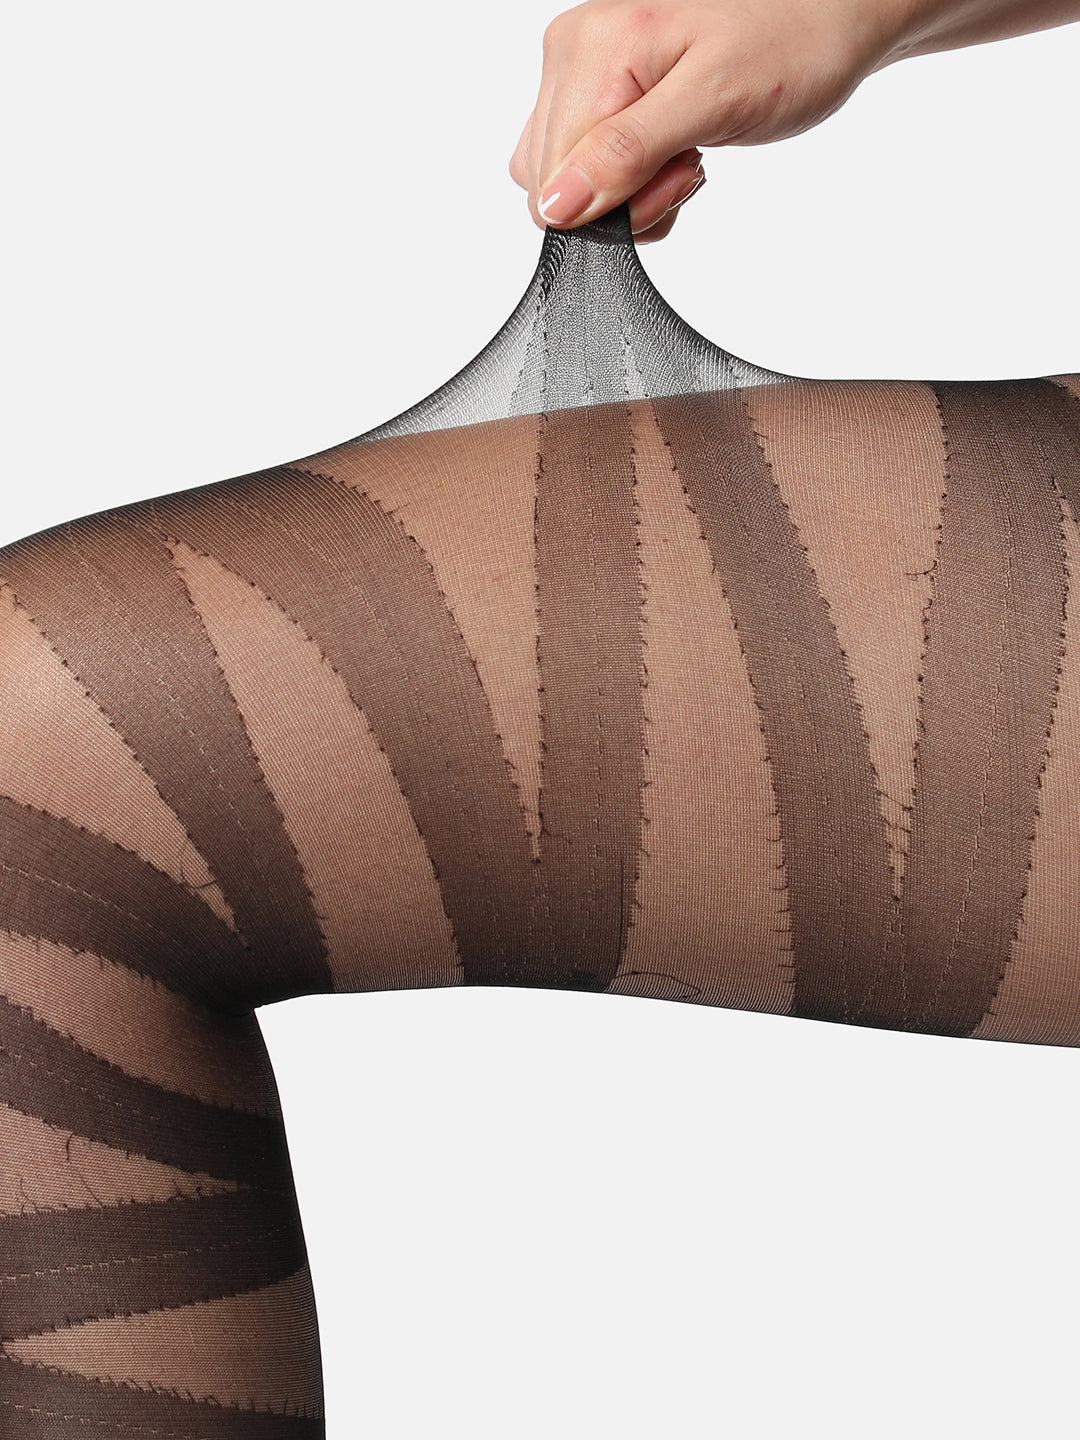 Black Striped Stockings